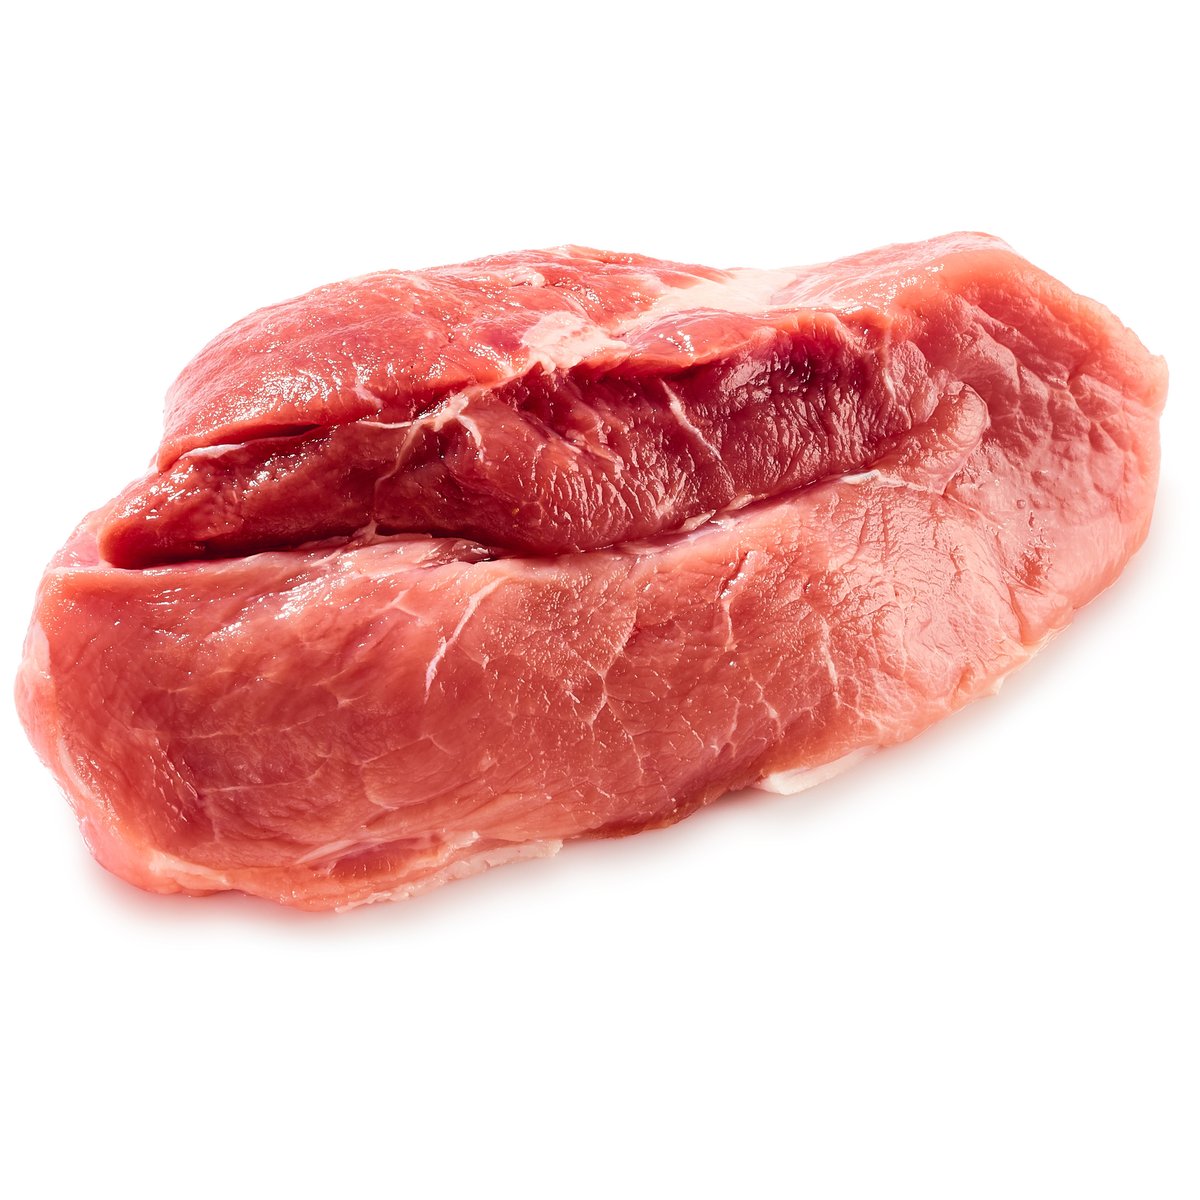 Qualivo Vepřová kýta bez kosti rump steak